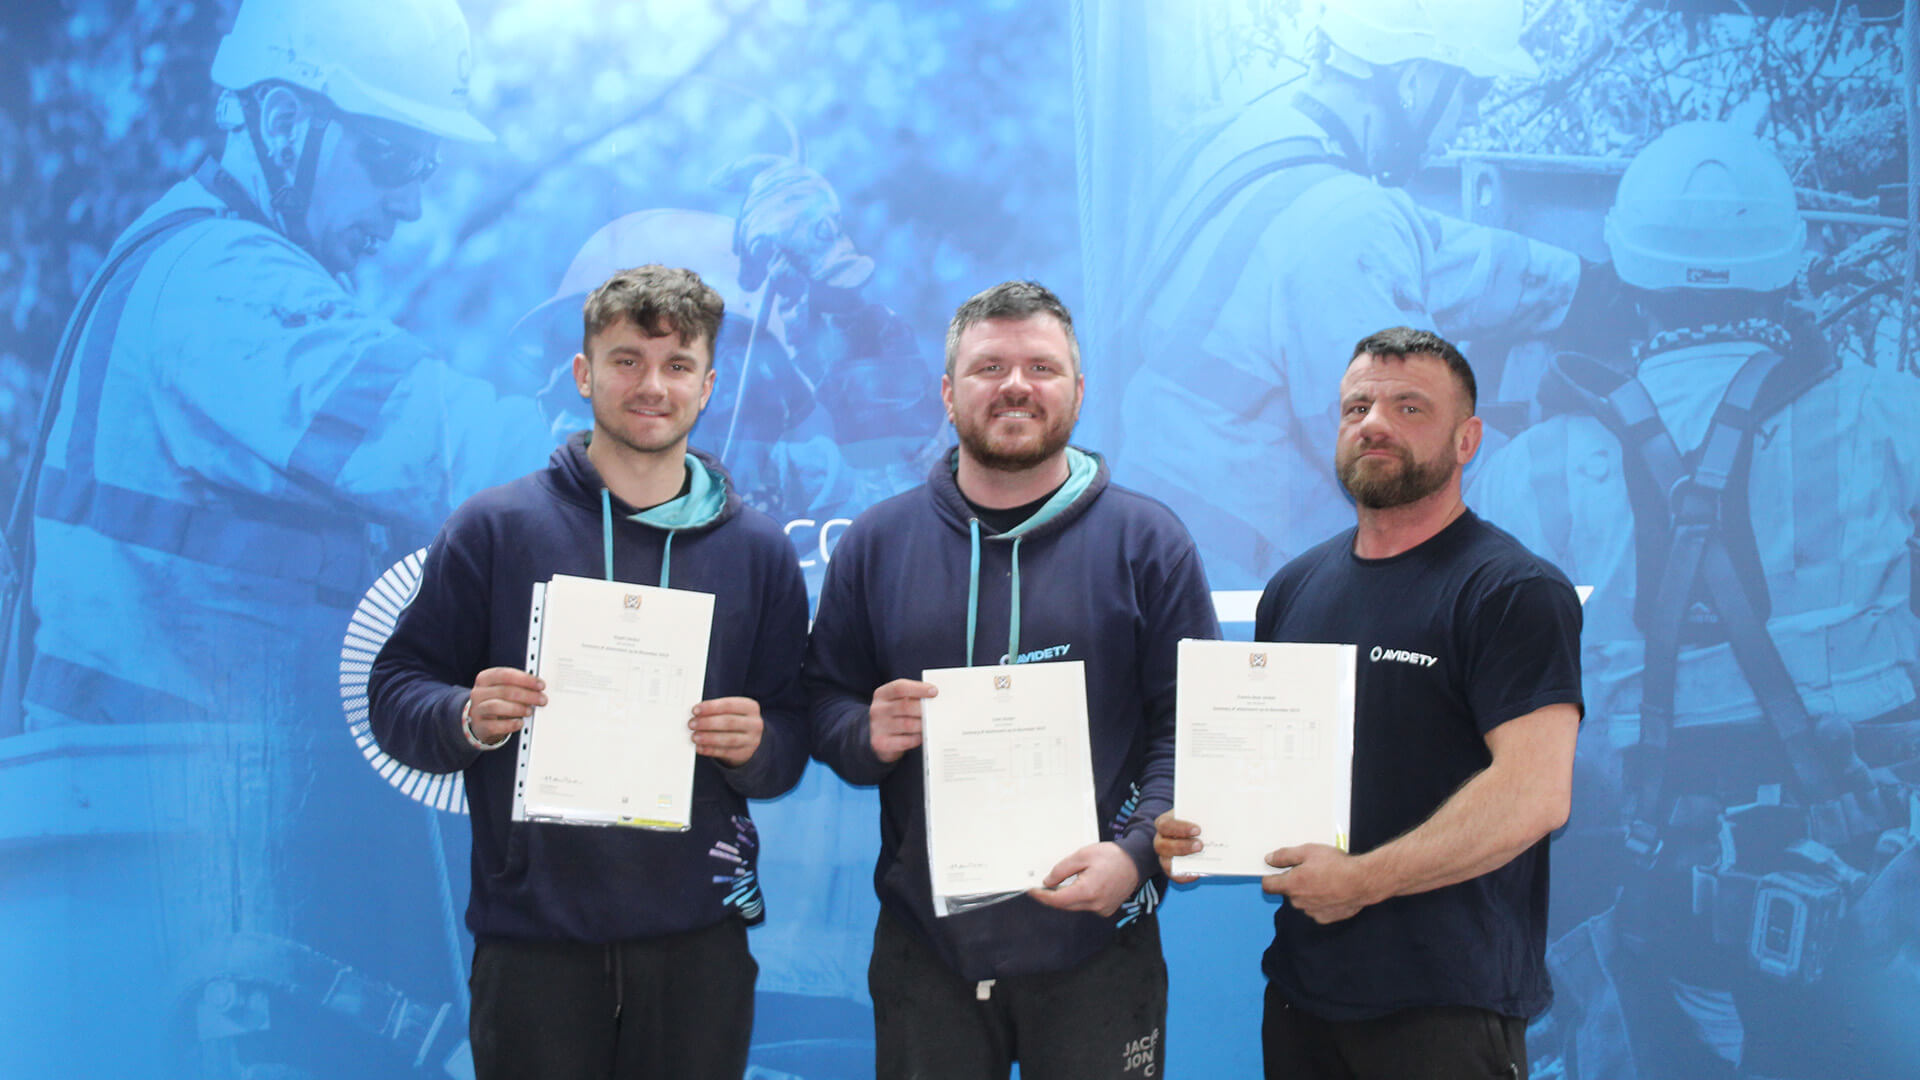 3 Men Standing, Each Holding a Certificate